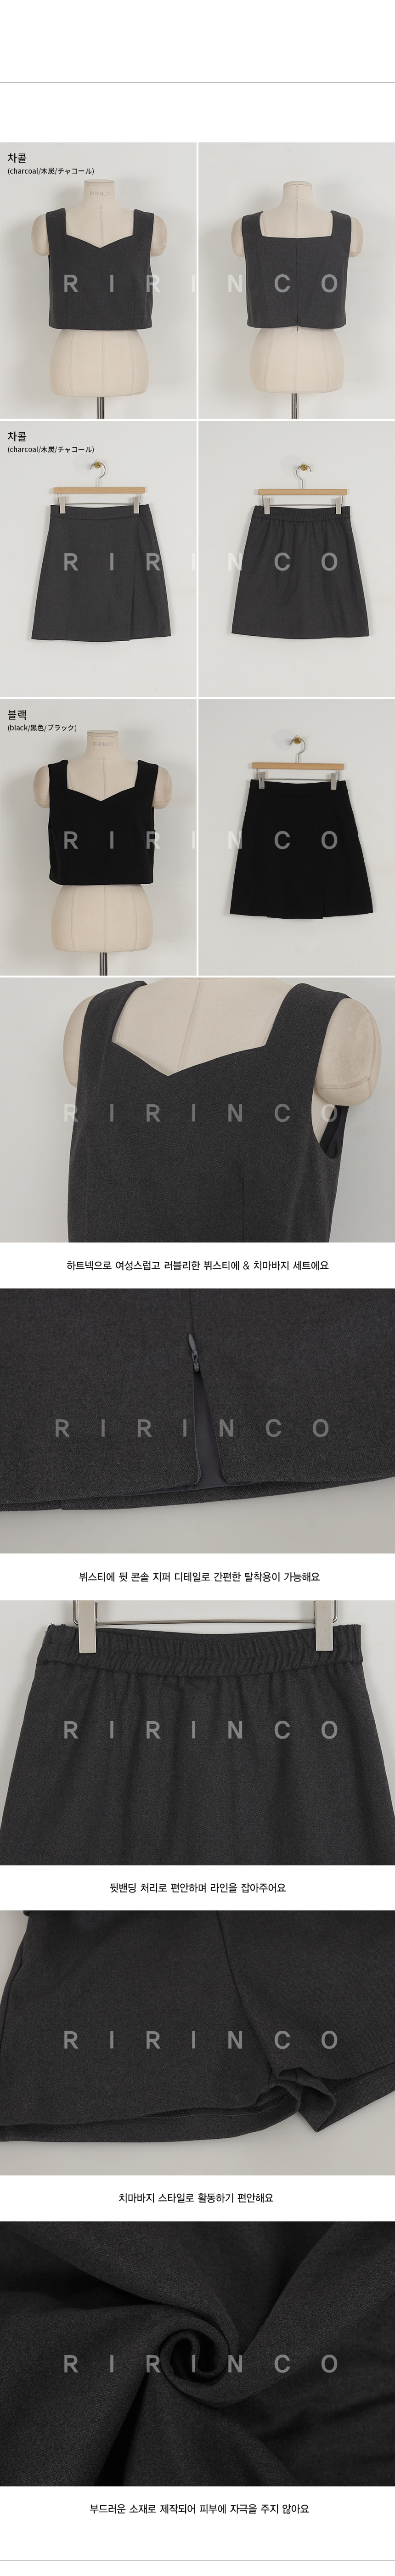 RIRINCO ハートネックビスチェ＆ラップ風スカートパンツセット